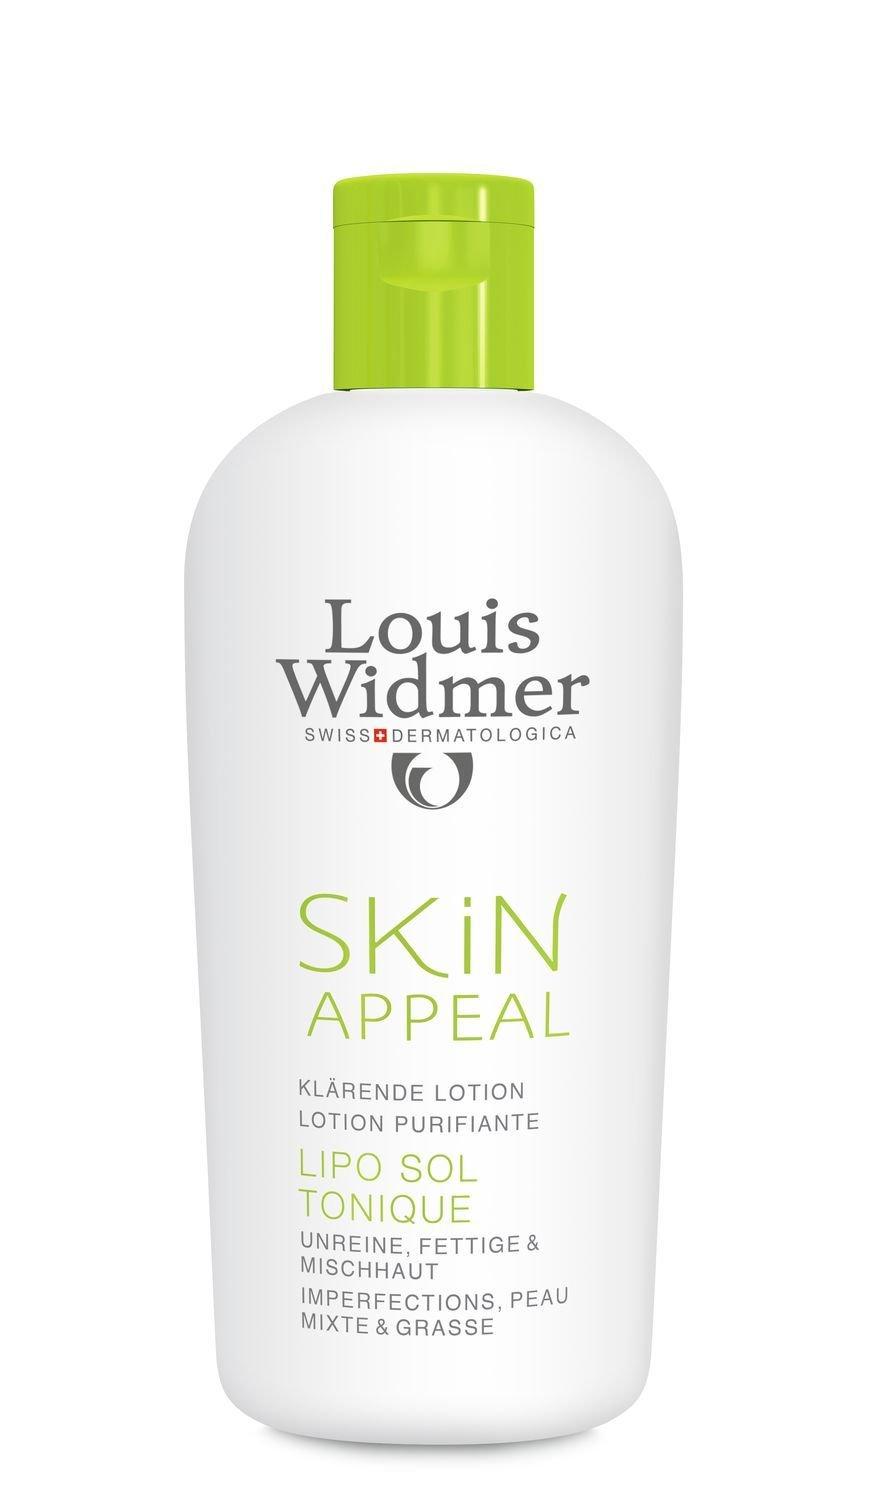 Louis Widmer Skin Appeal Lipo Sol Tonique Skin Appeal Lipo Sol Tonique 